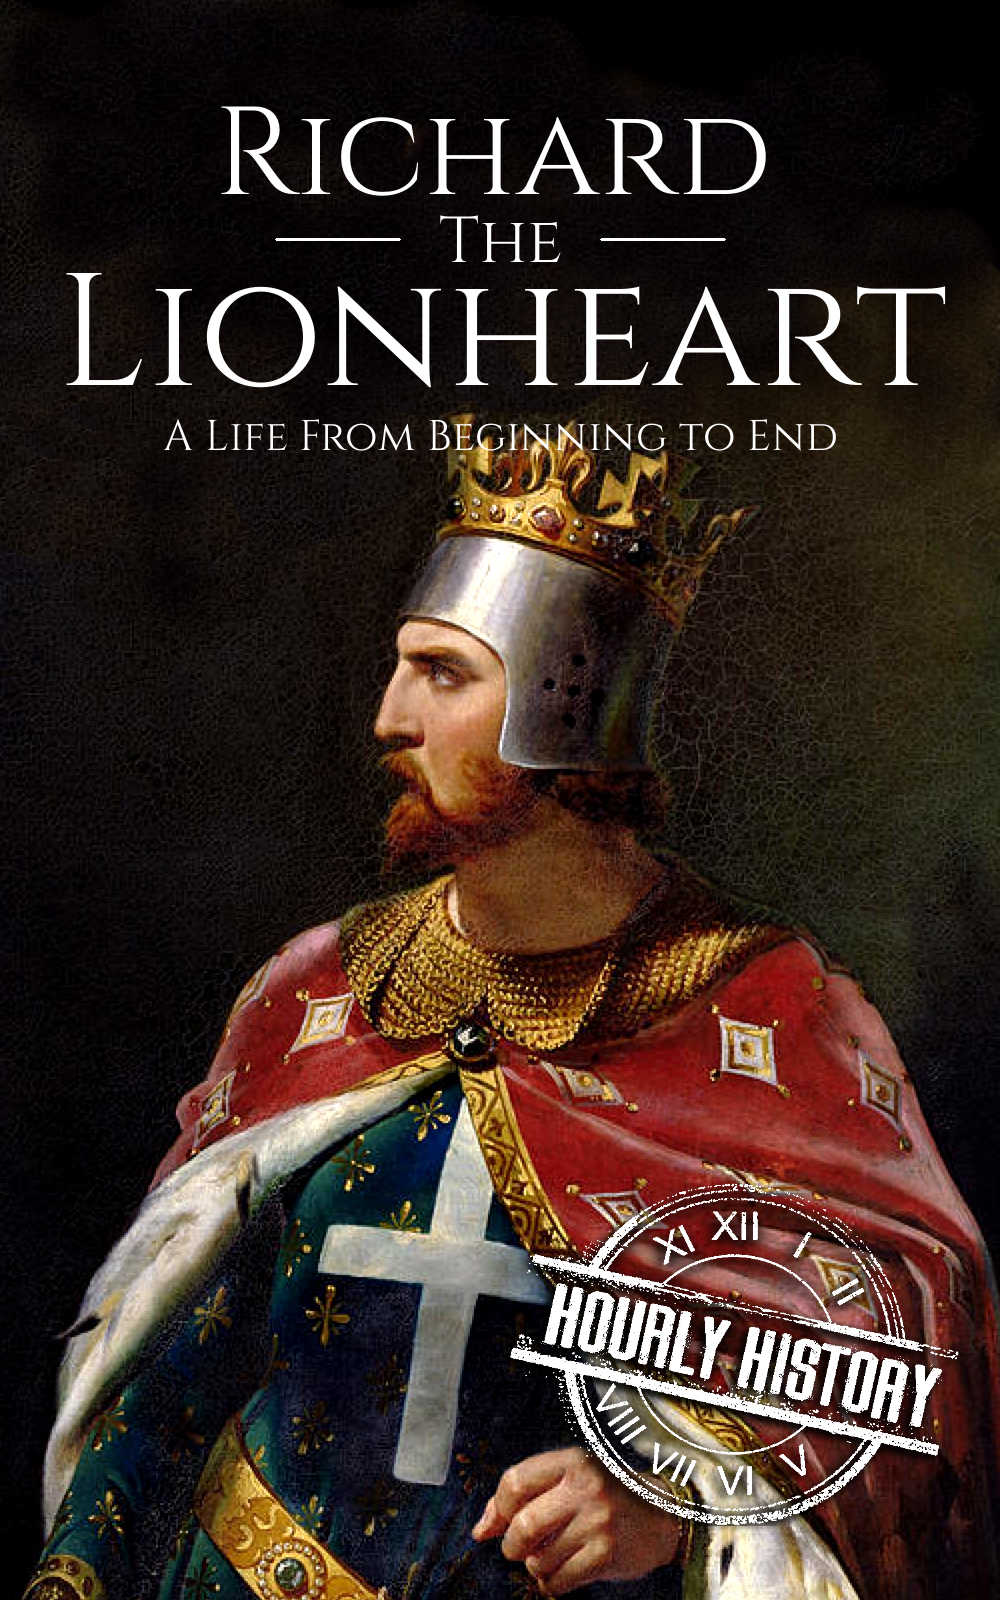 richard the lionheart short biography